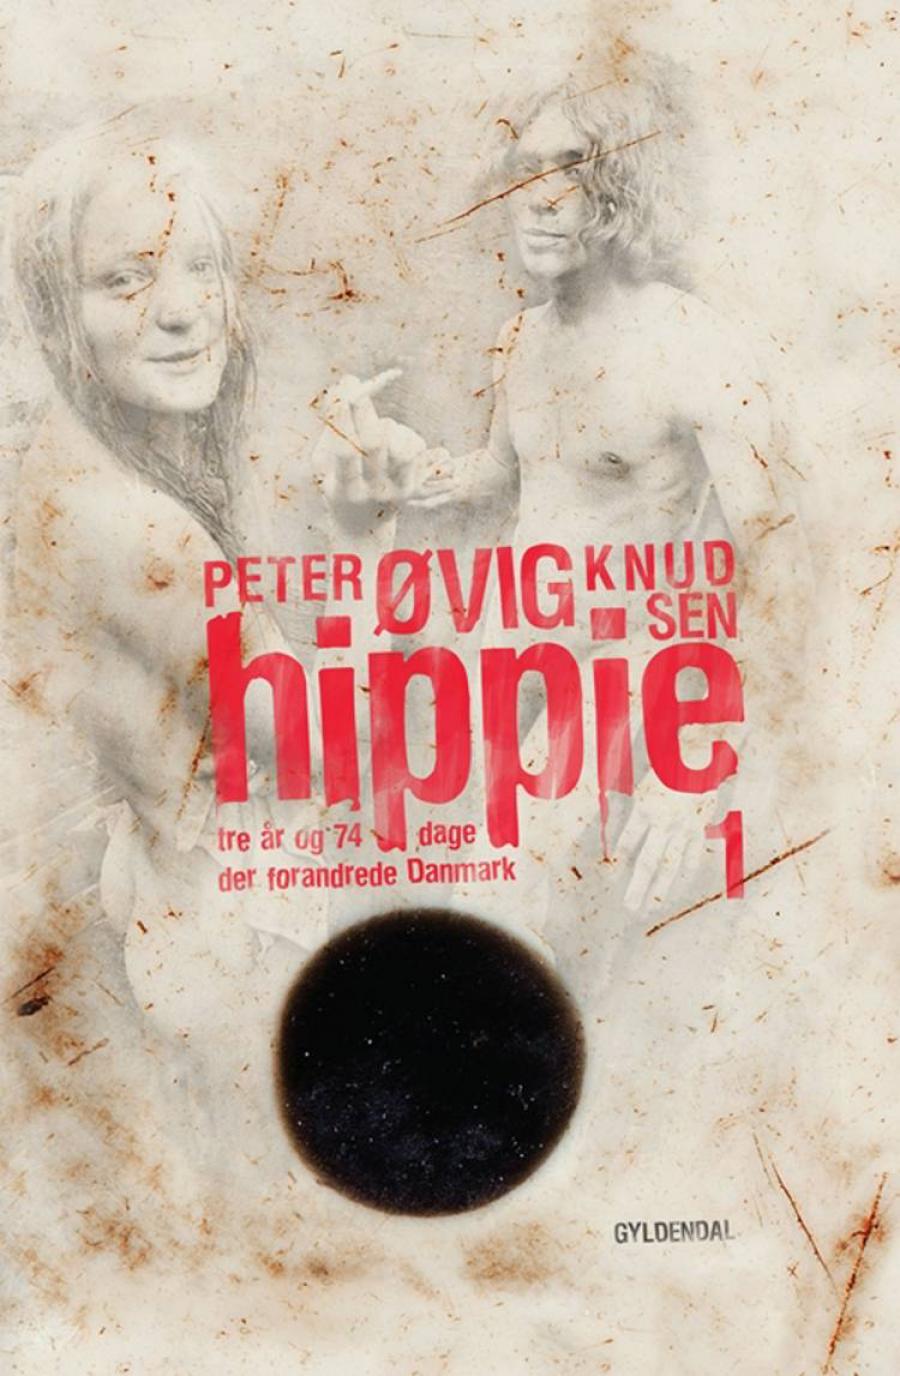 Hippie af Peter Øvig Knudsen